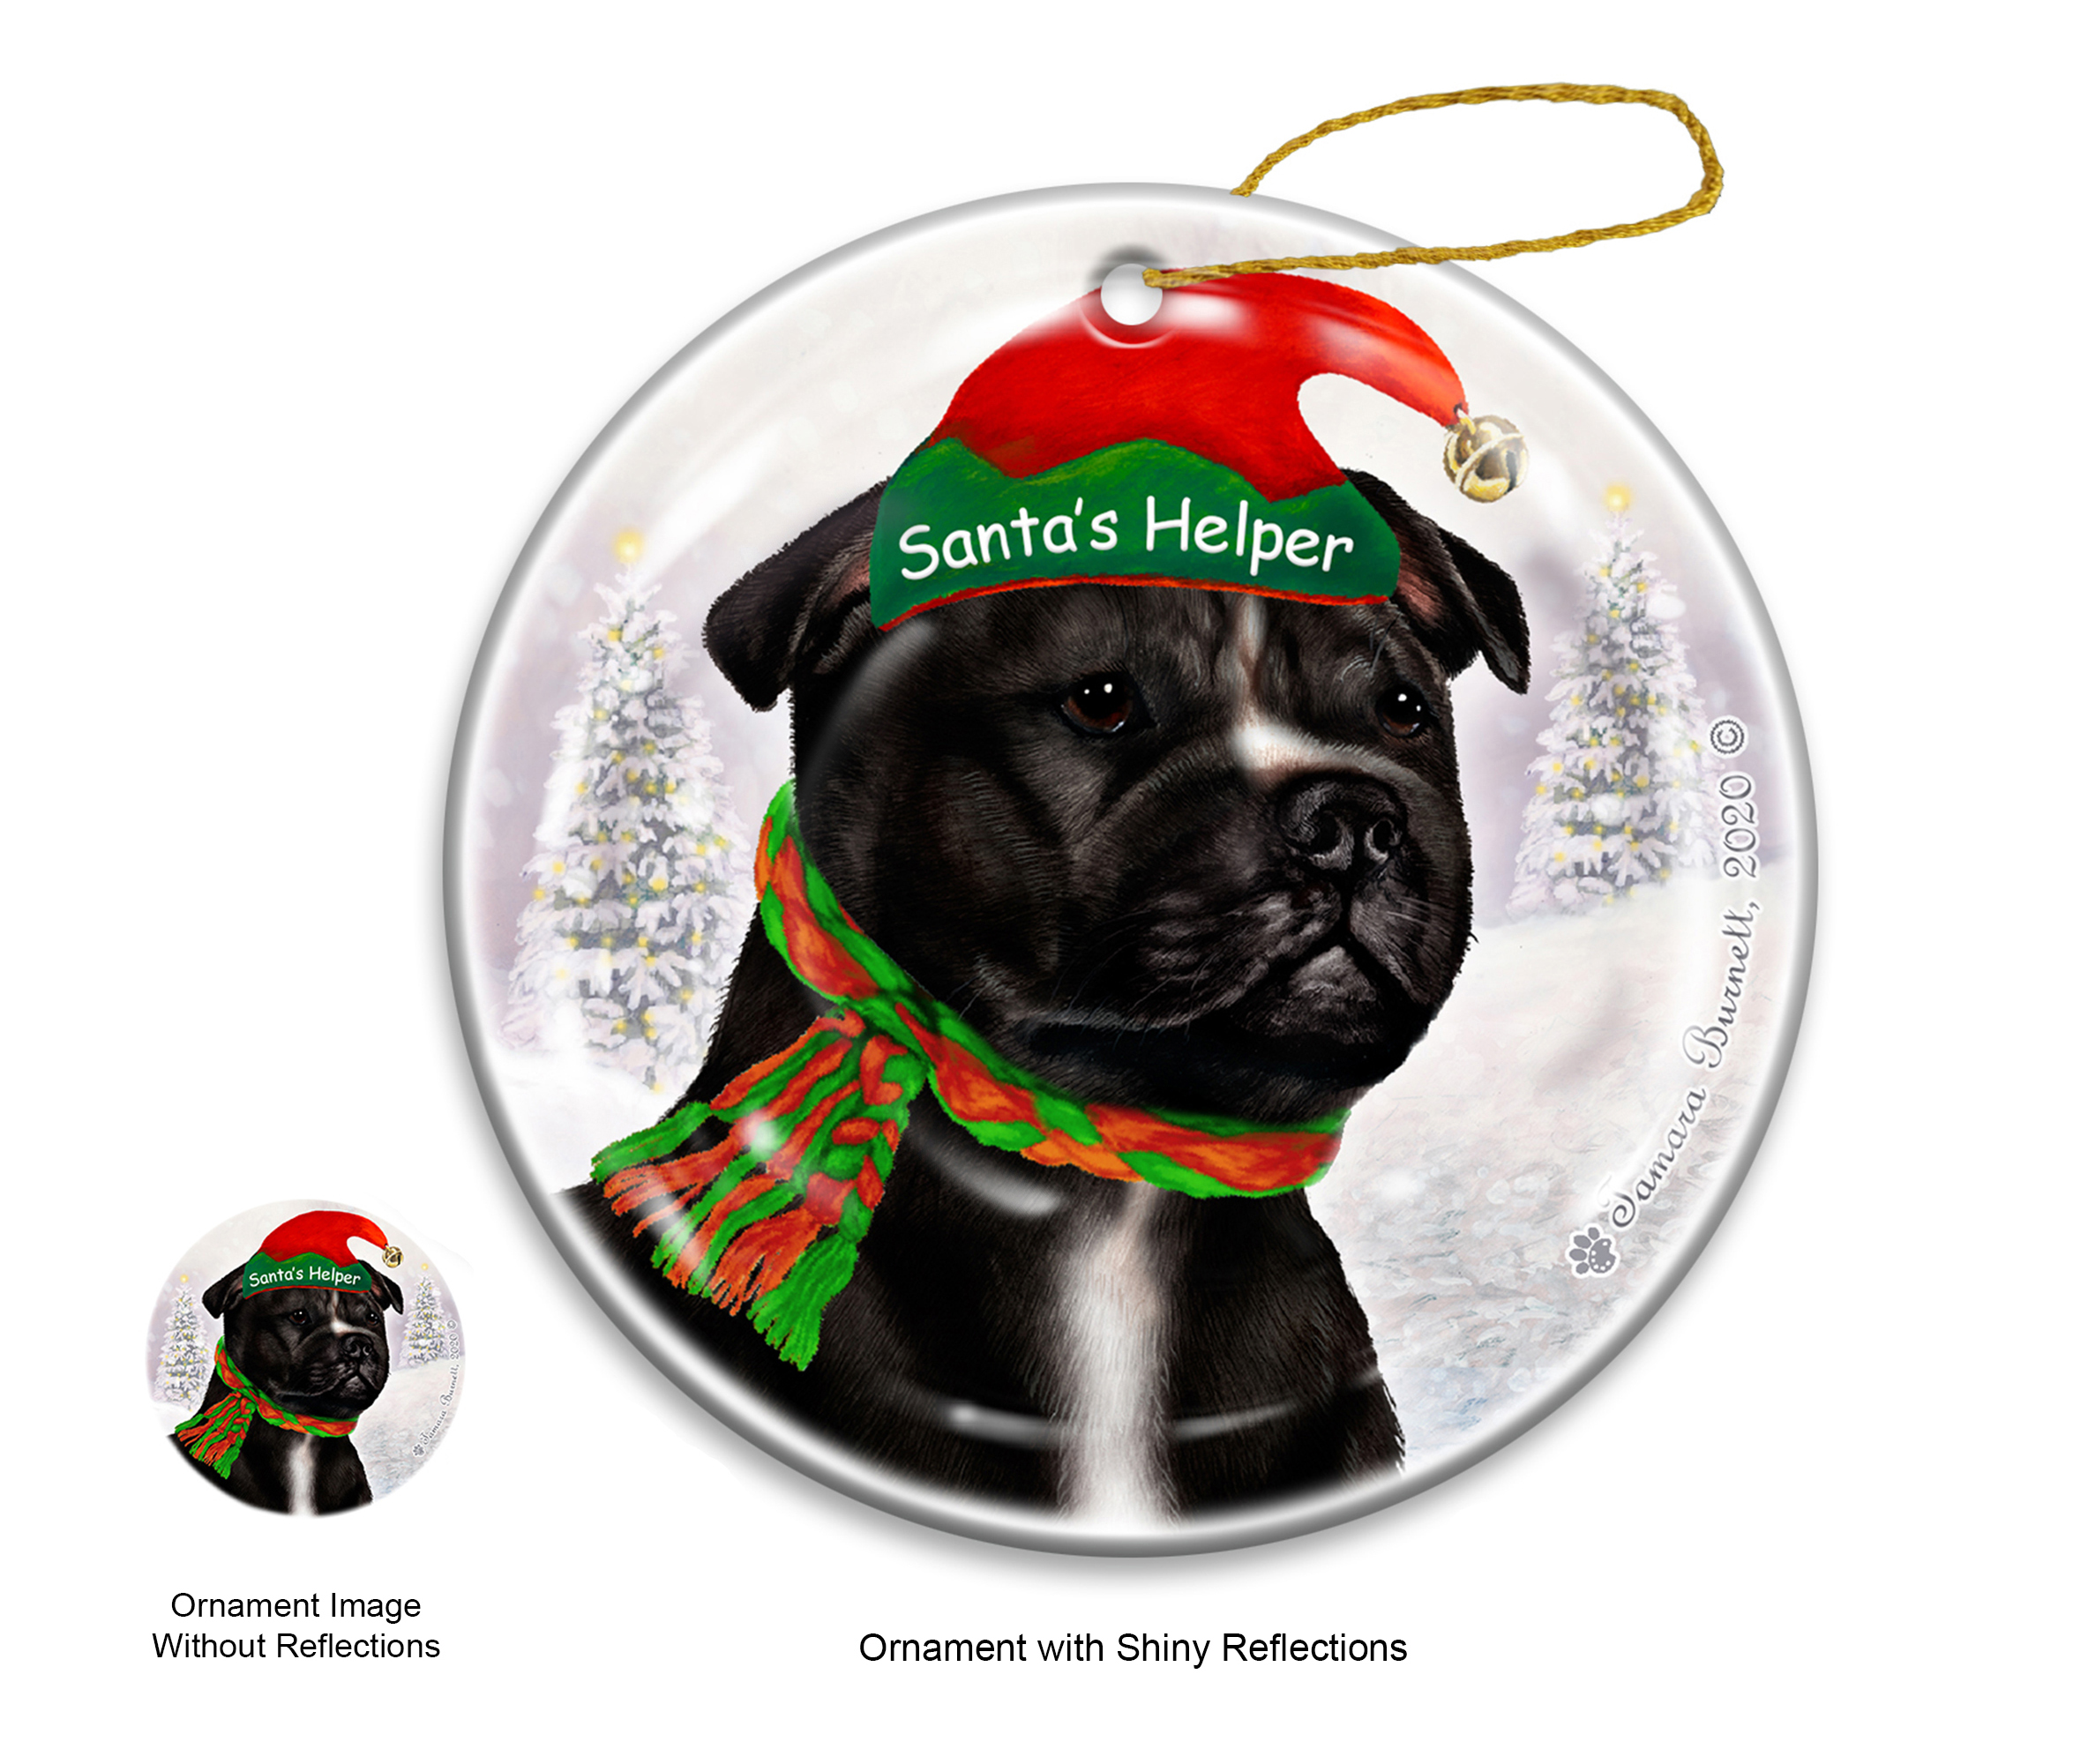 Staffordshire Bull Terr Black & White - Santa's Helper Ornament image